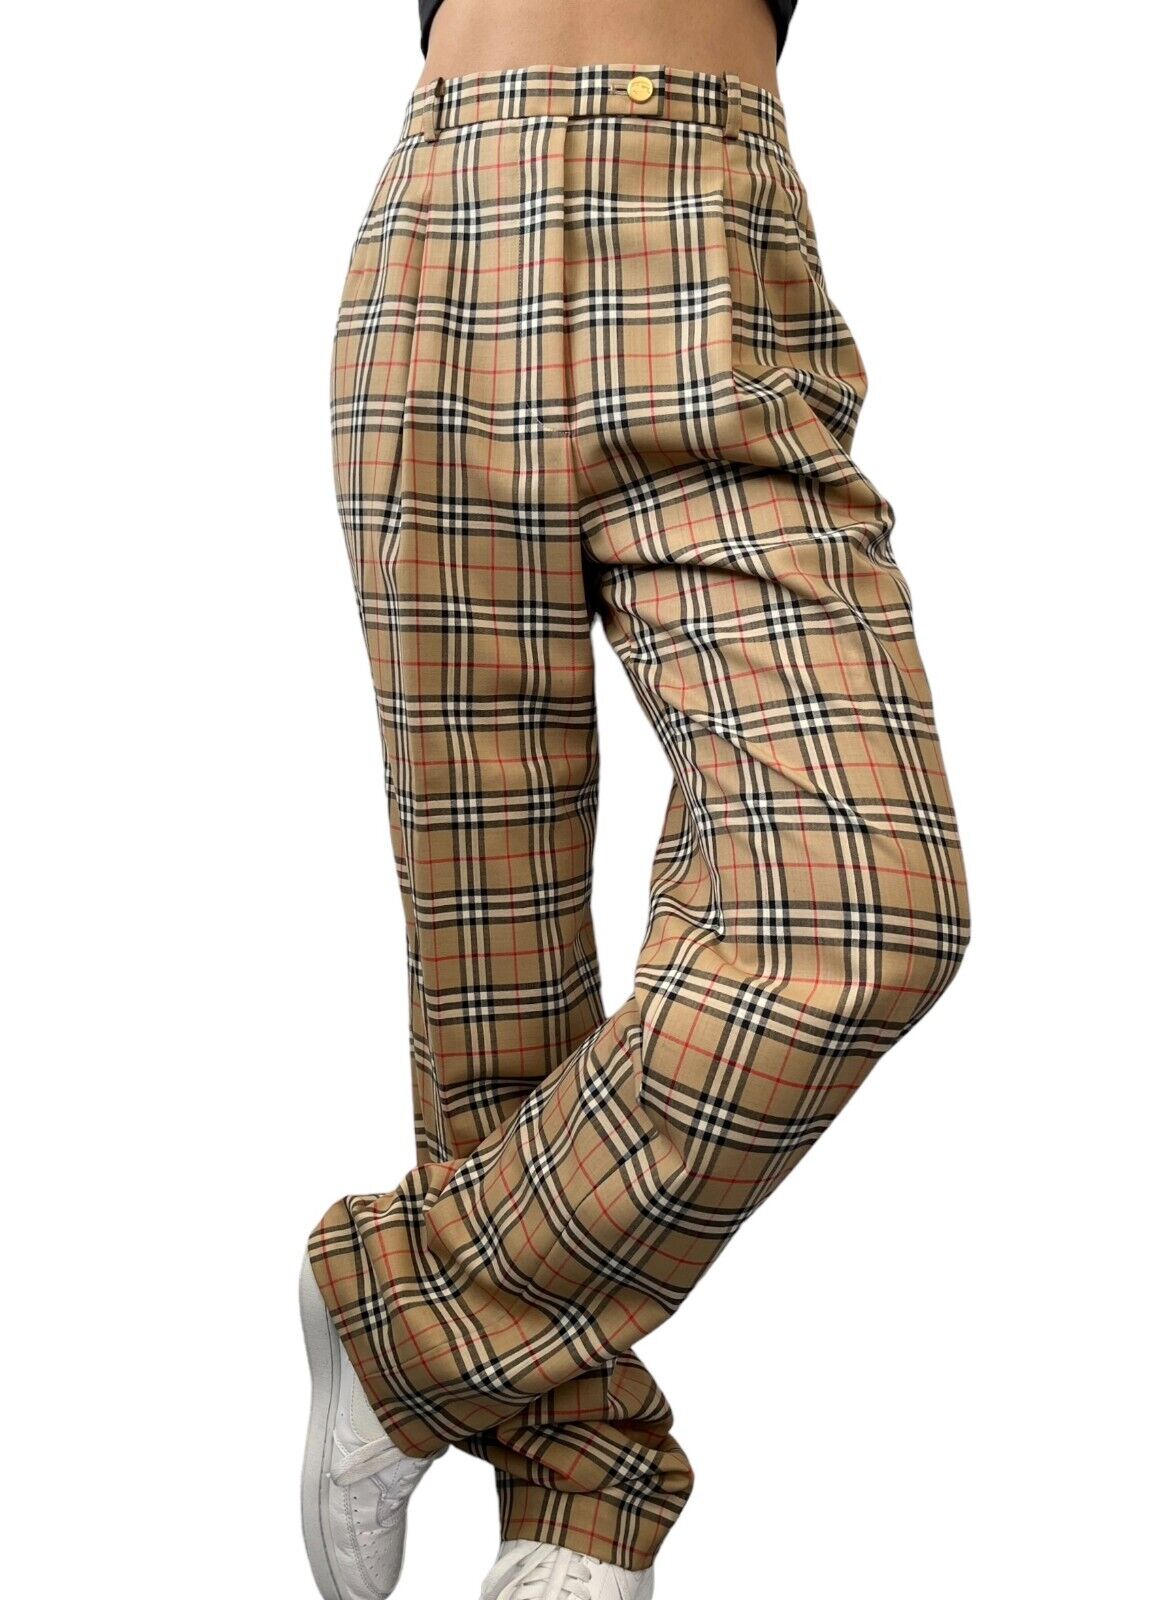 Burberrys Vintage Plaid High Waist Pants #40 Beige Black Red Wool Rank AB+